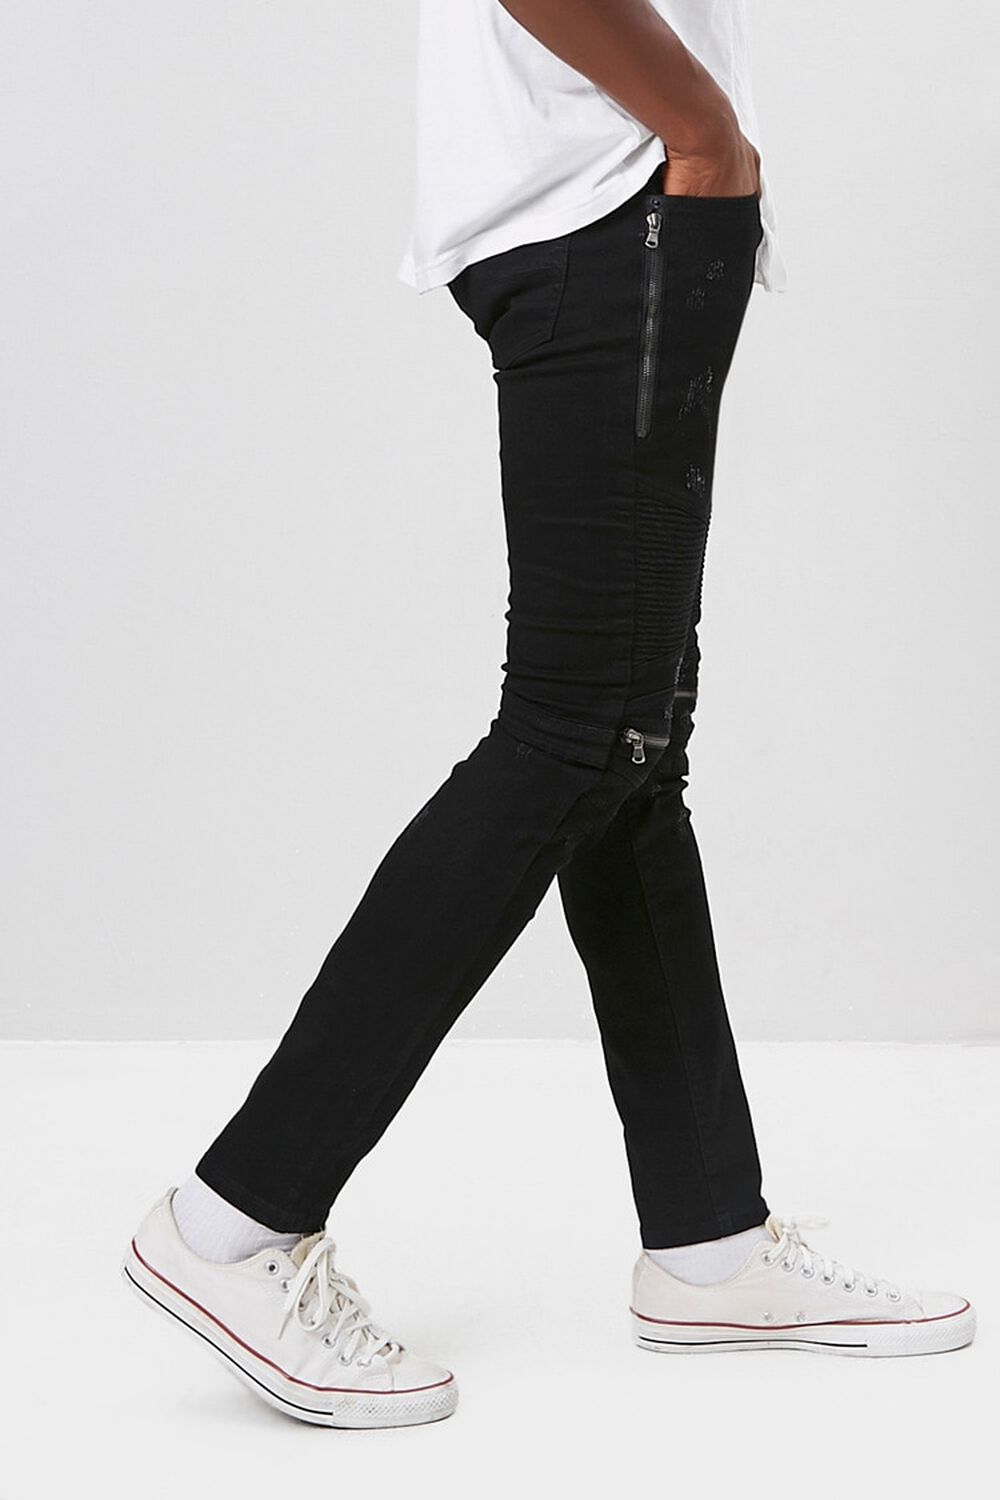 BLACK Zippered Moto Skinny Jeans, image 2